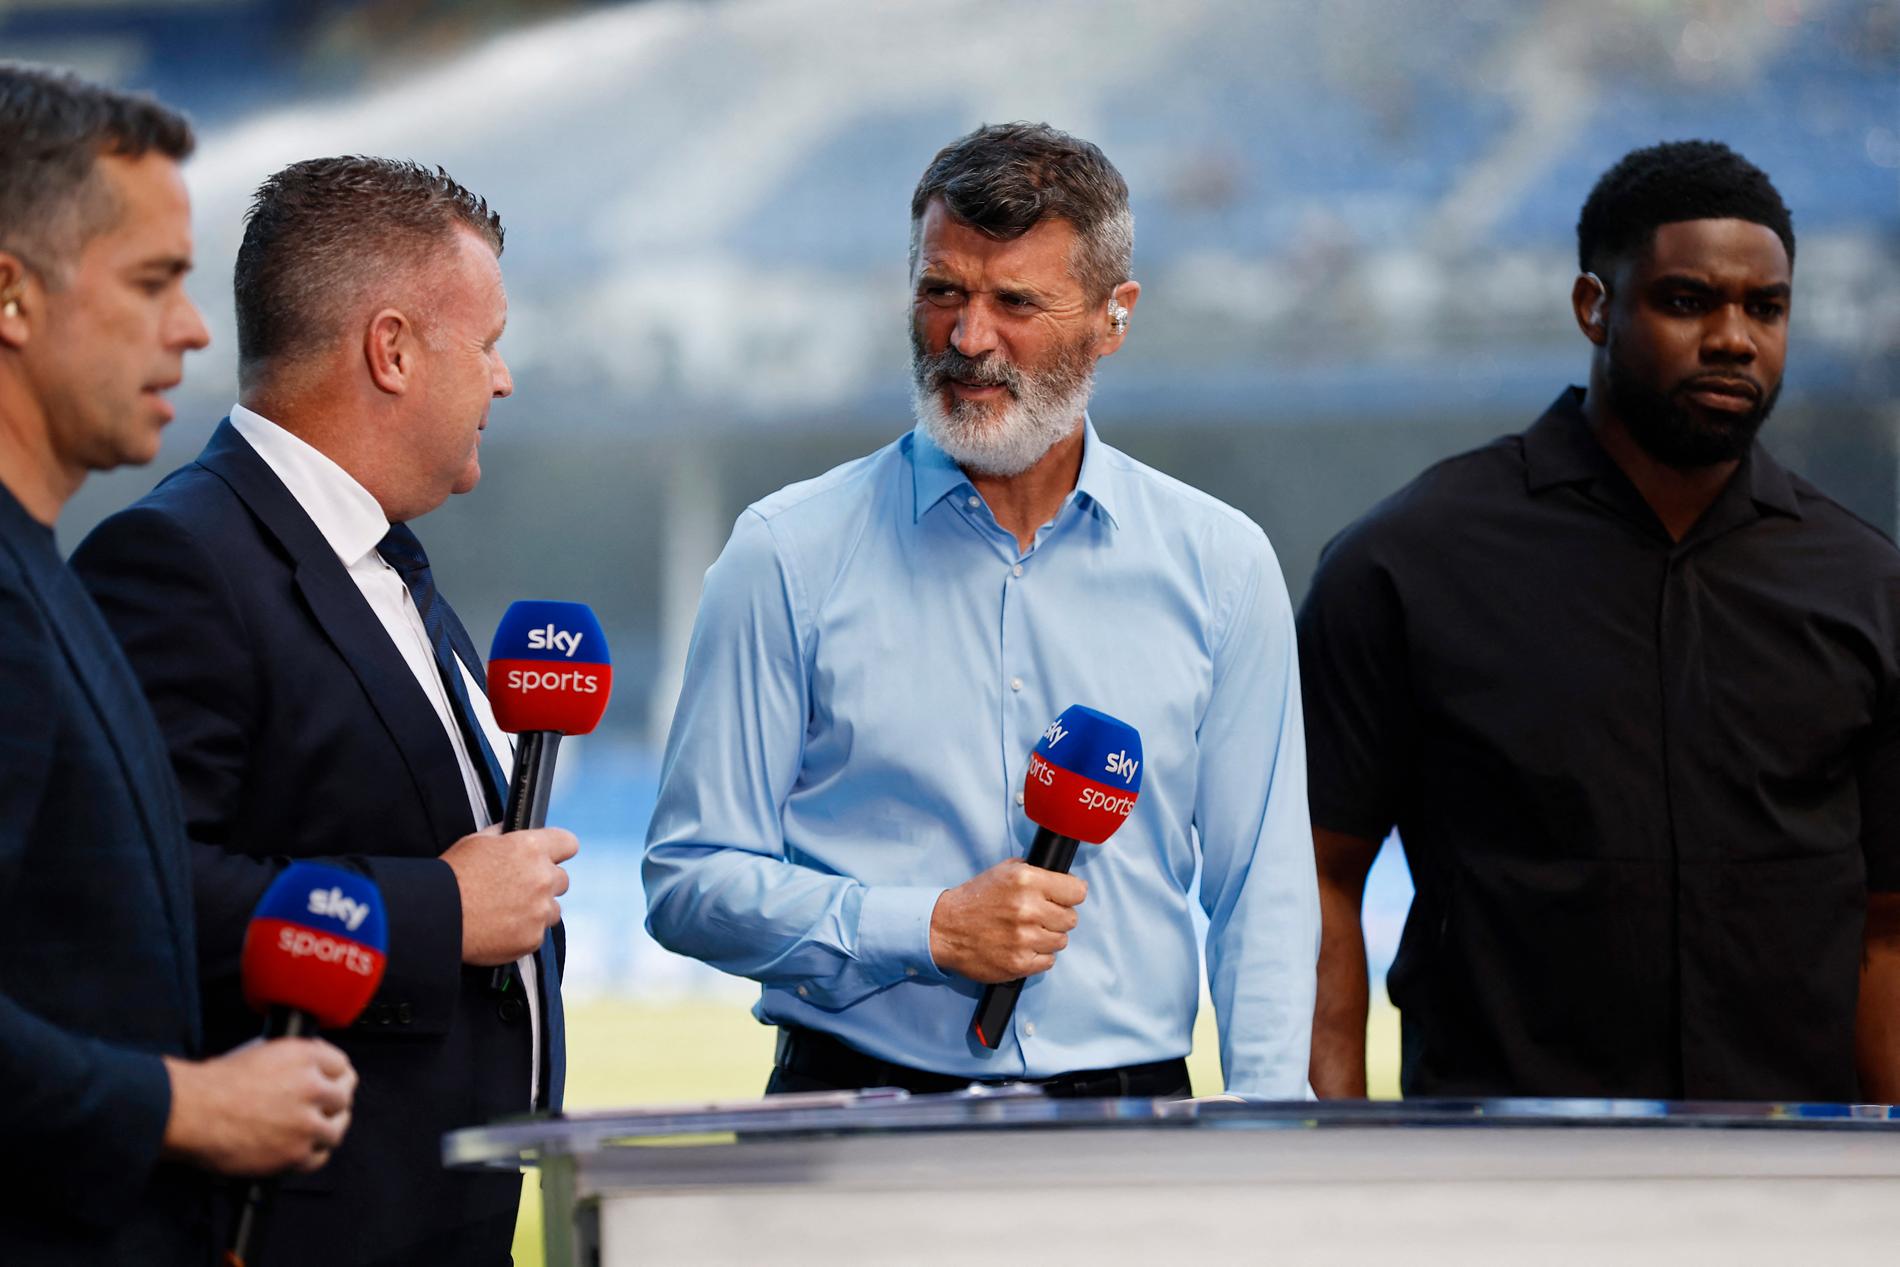 Premier League: Roy Keane criticizes Virgil van Dijk after Liverpool and Manchester United match